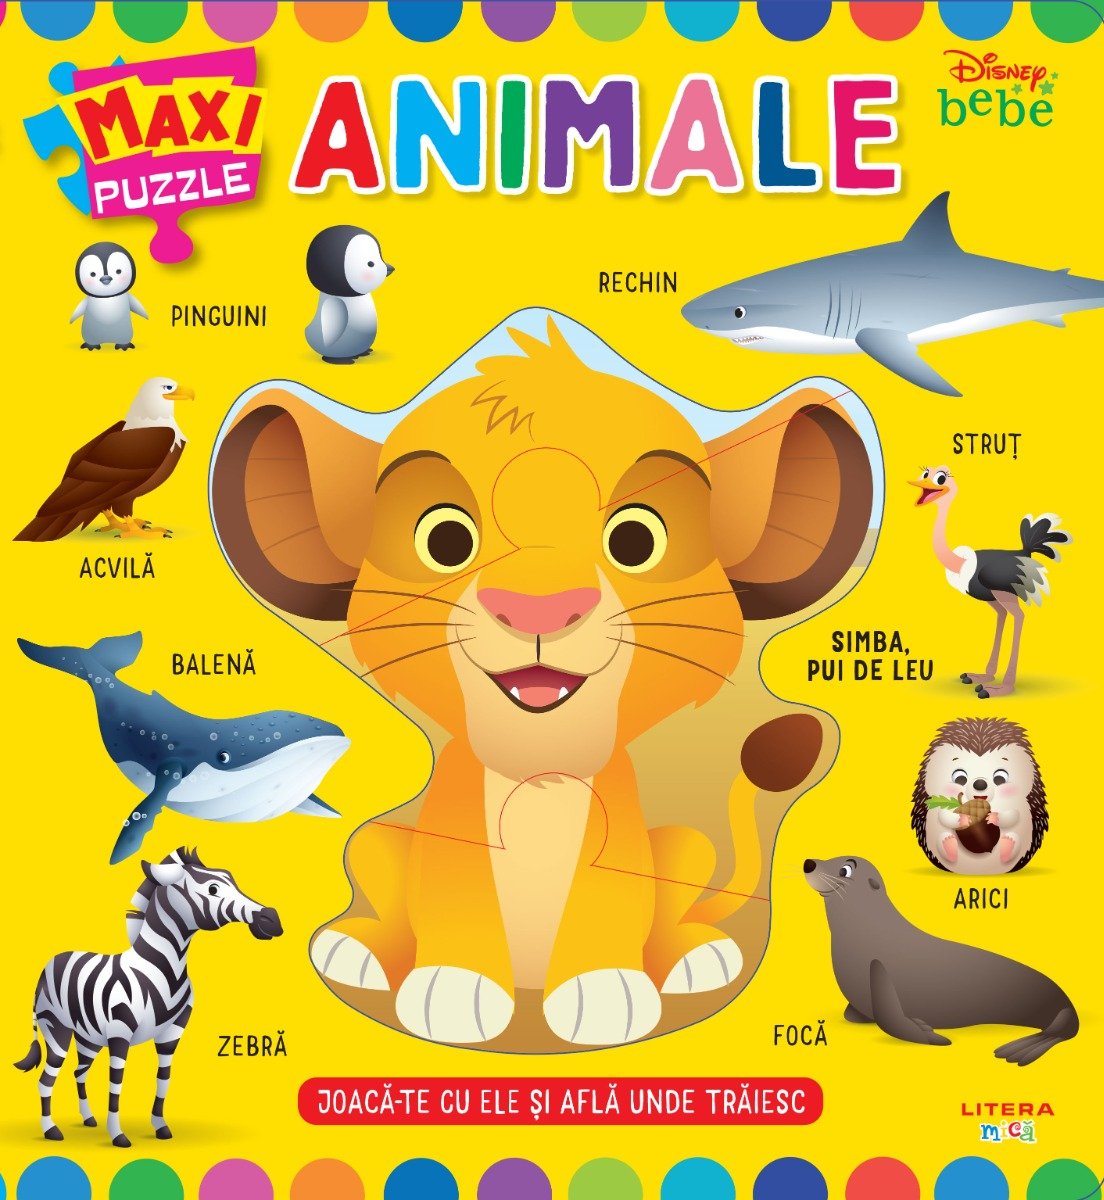 Disney bebe, Animale, Maxi Puzzle